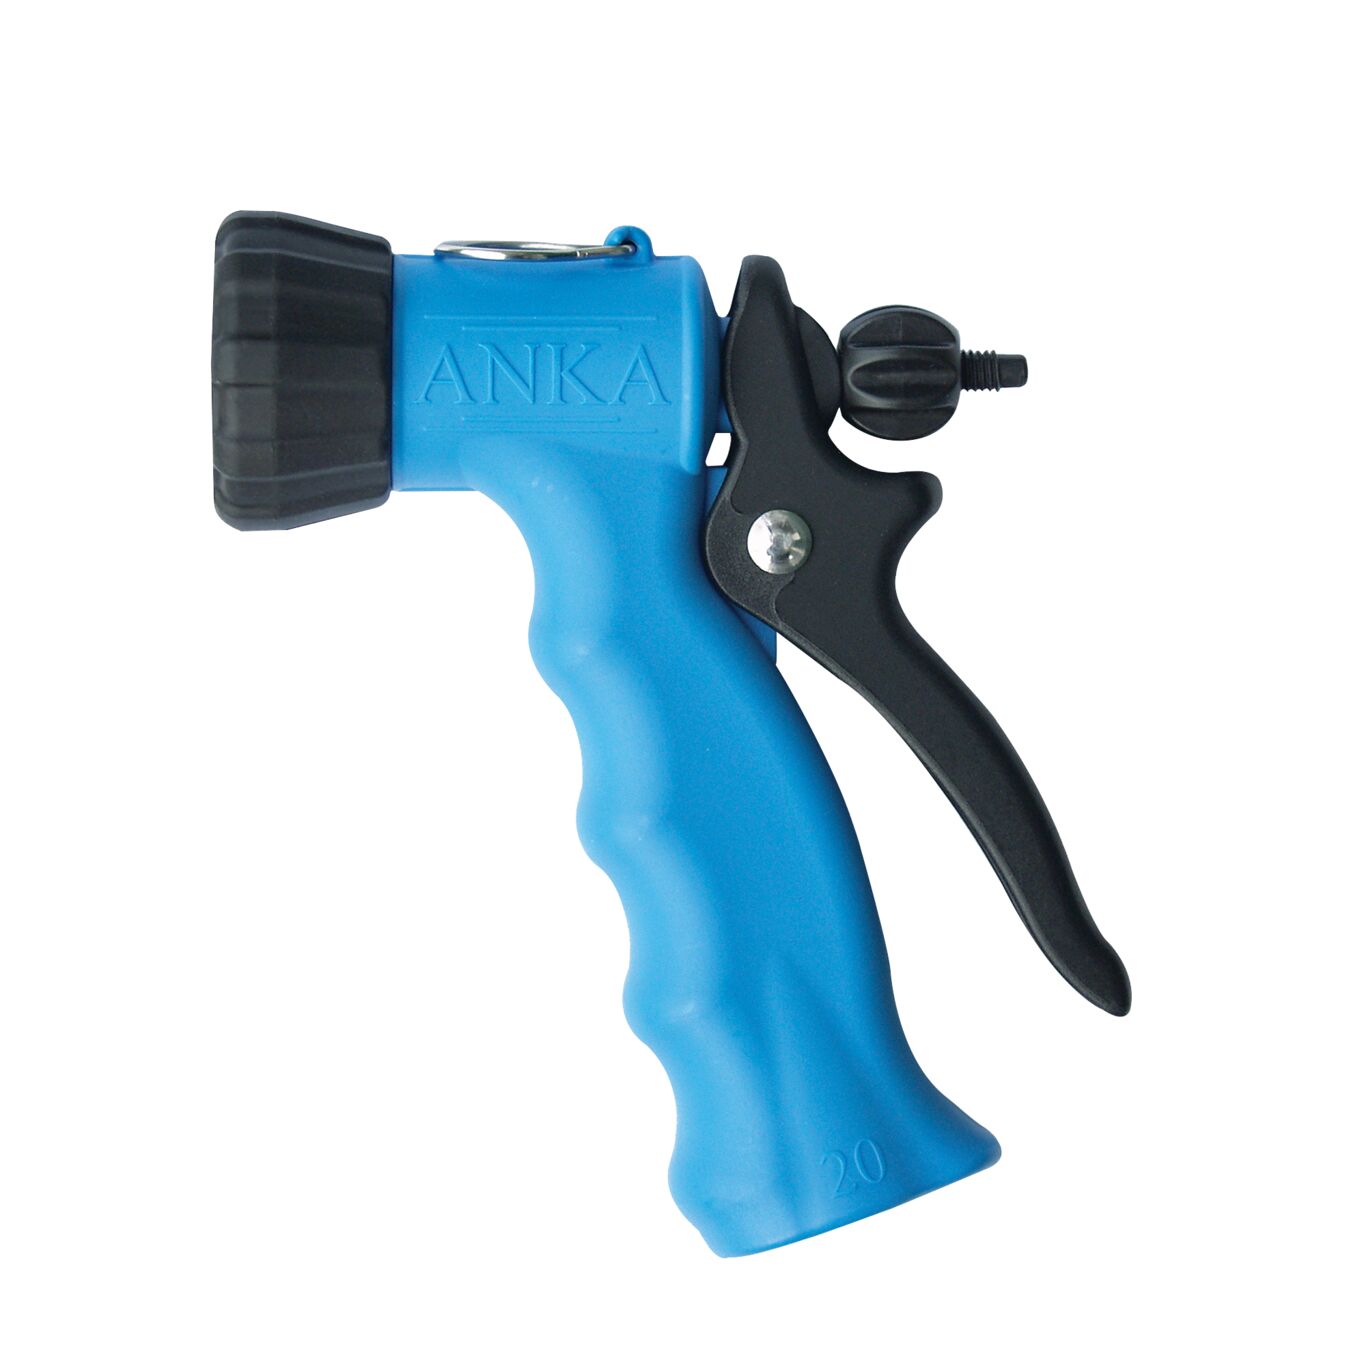 Product Image - Trigger Spray Gun - AHNT20